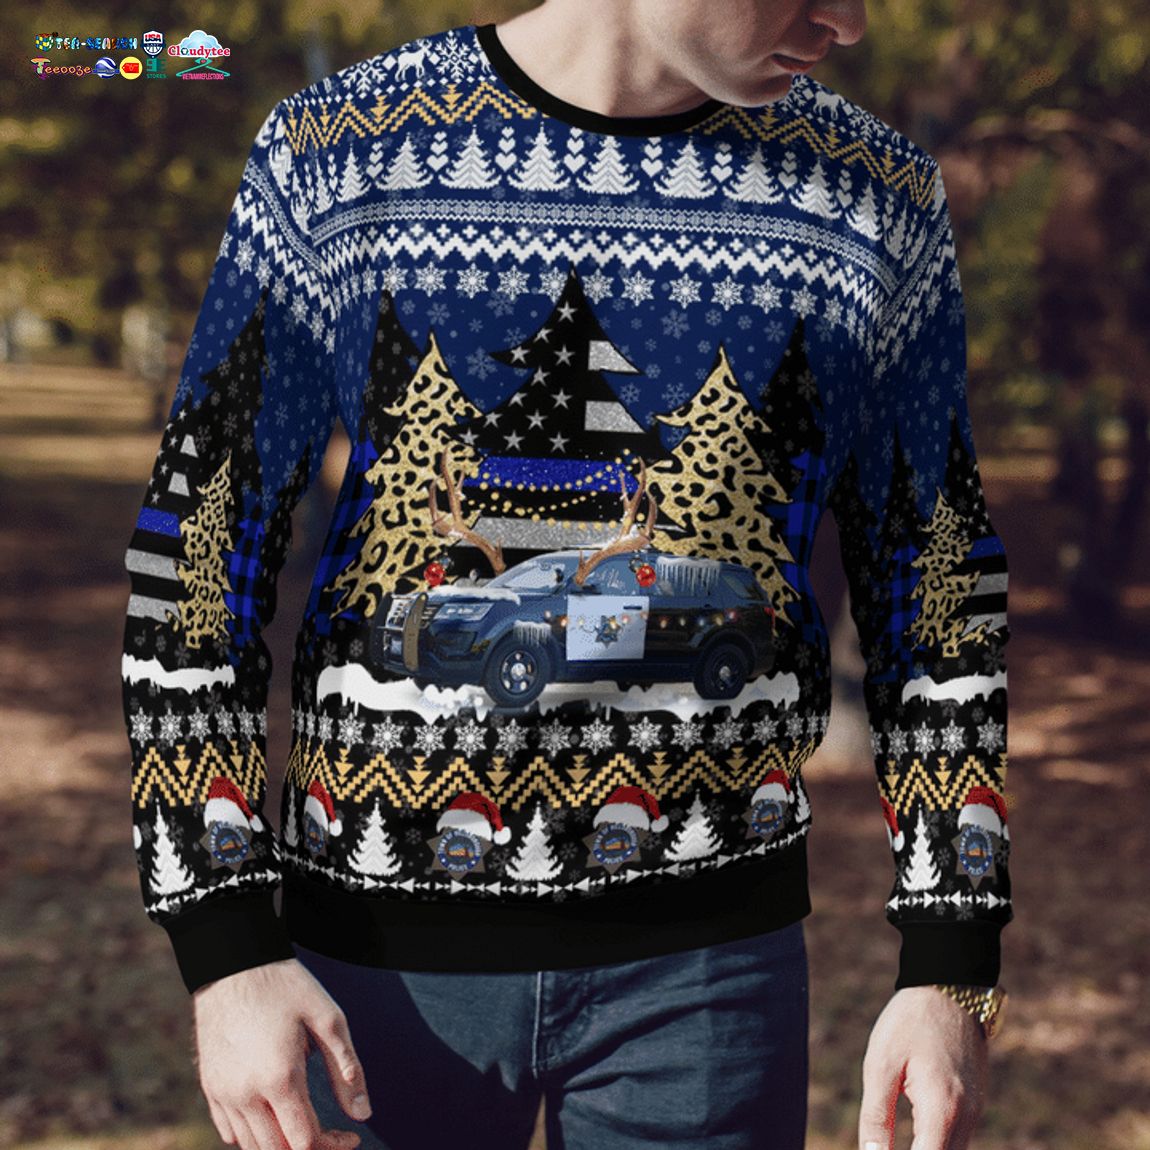 California Hillsborough Police Department 3D Christmas Sweater - Saleoff